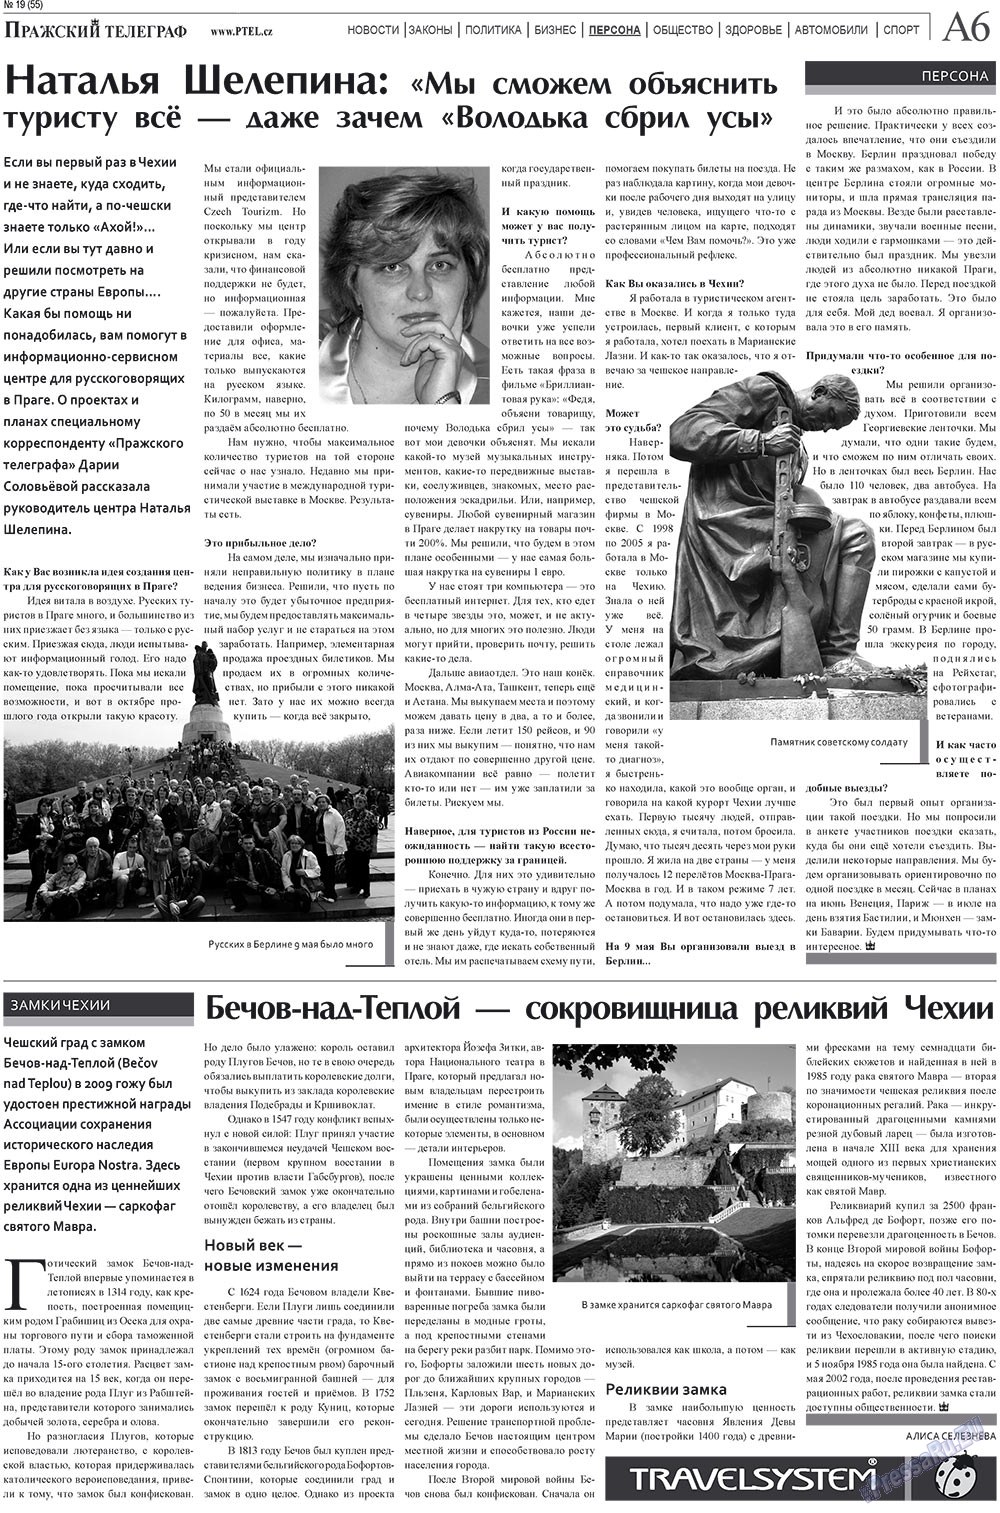 Пражский телеграф, газета. 2010 №19 стр.6